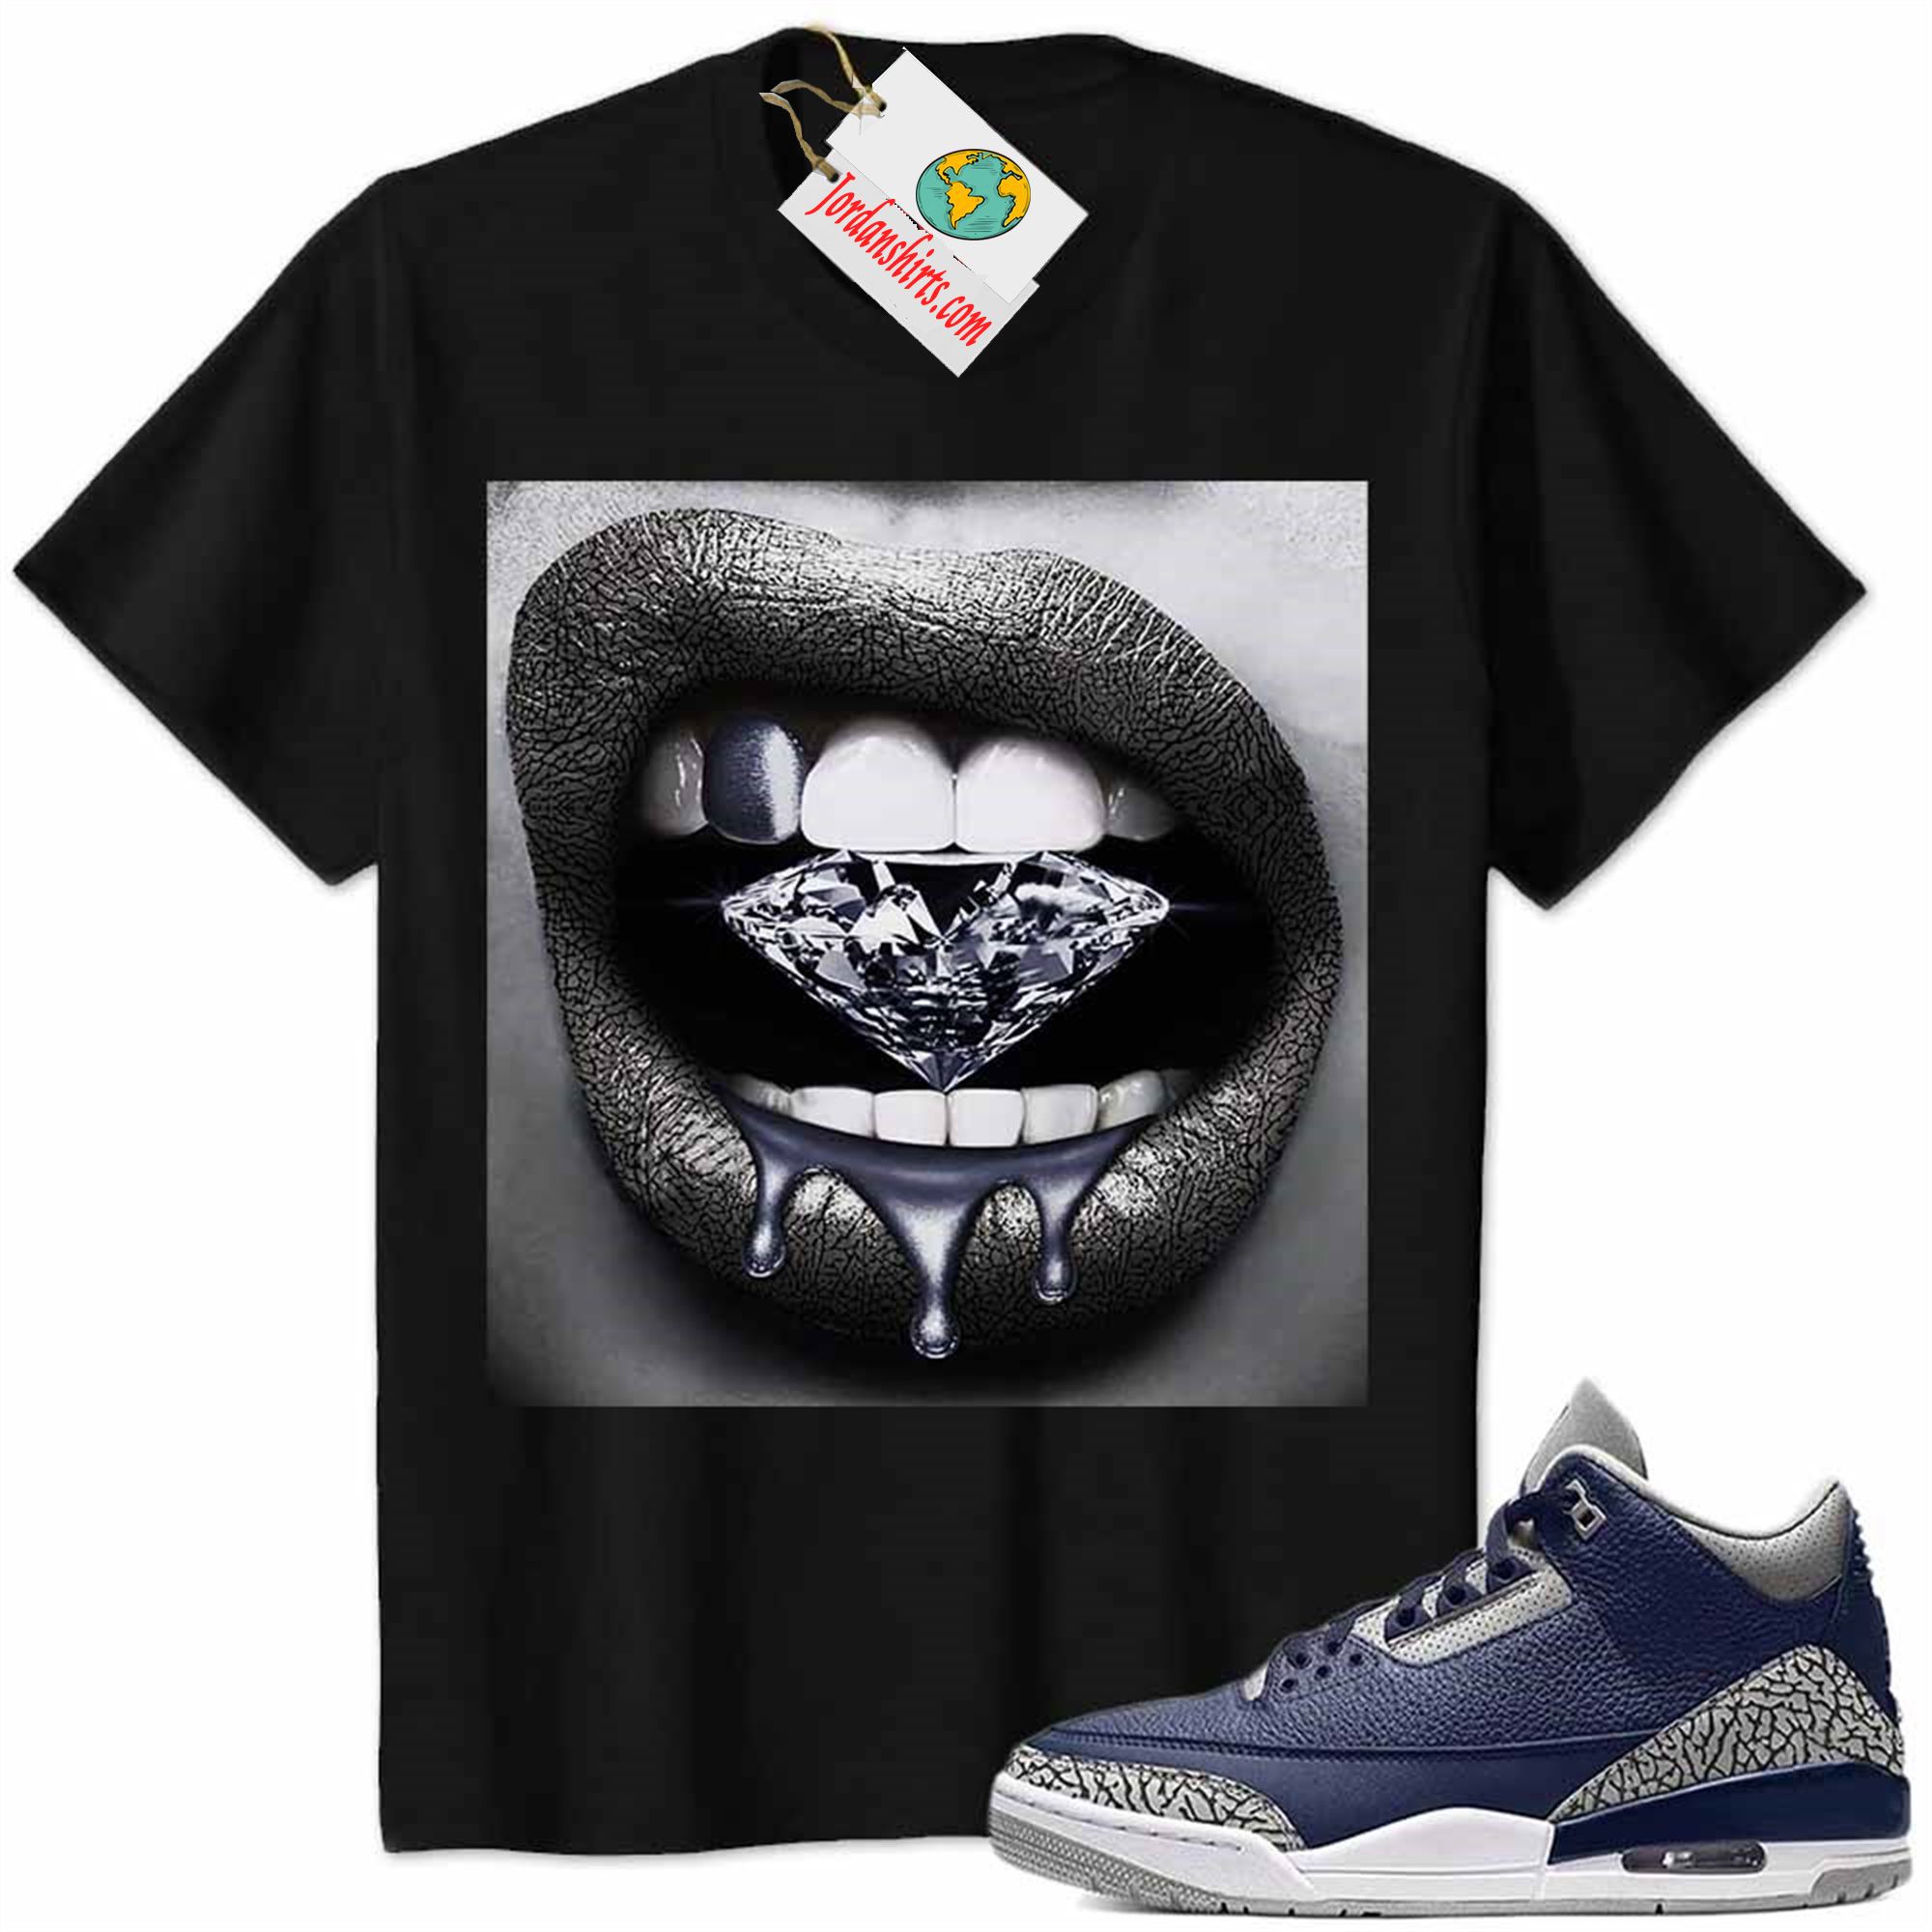 Jordan 3 Shirt, Jordan 3 Georgetown Midnight Navy Shirt Sexy Lip Bite Diamond Dripping Black Full Size Up To 5xl